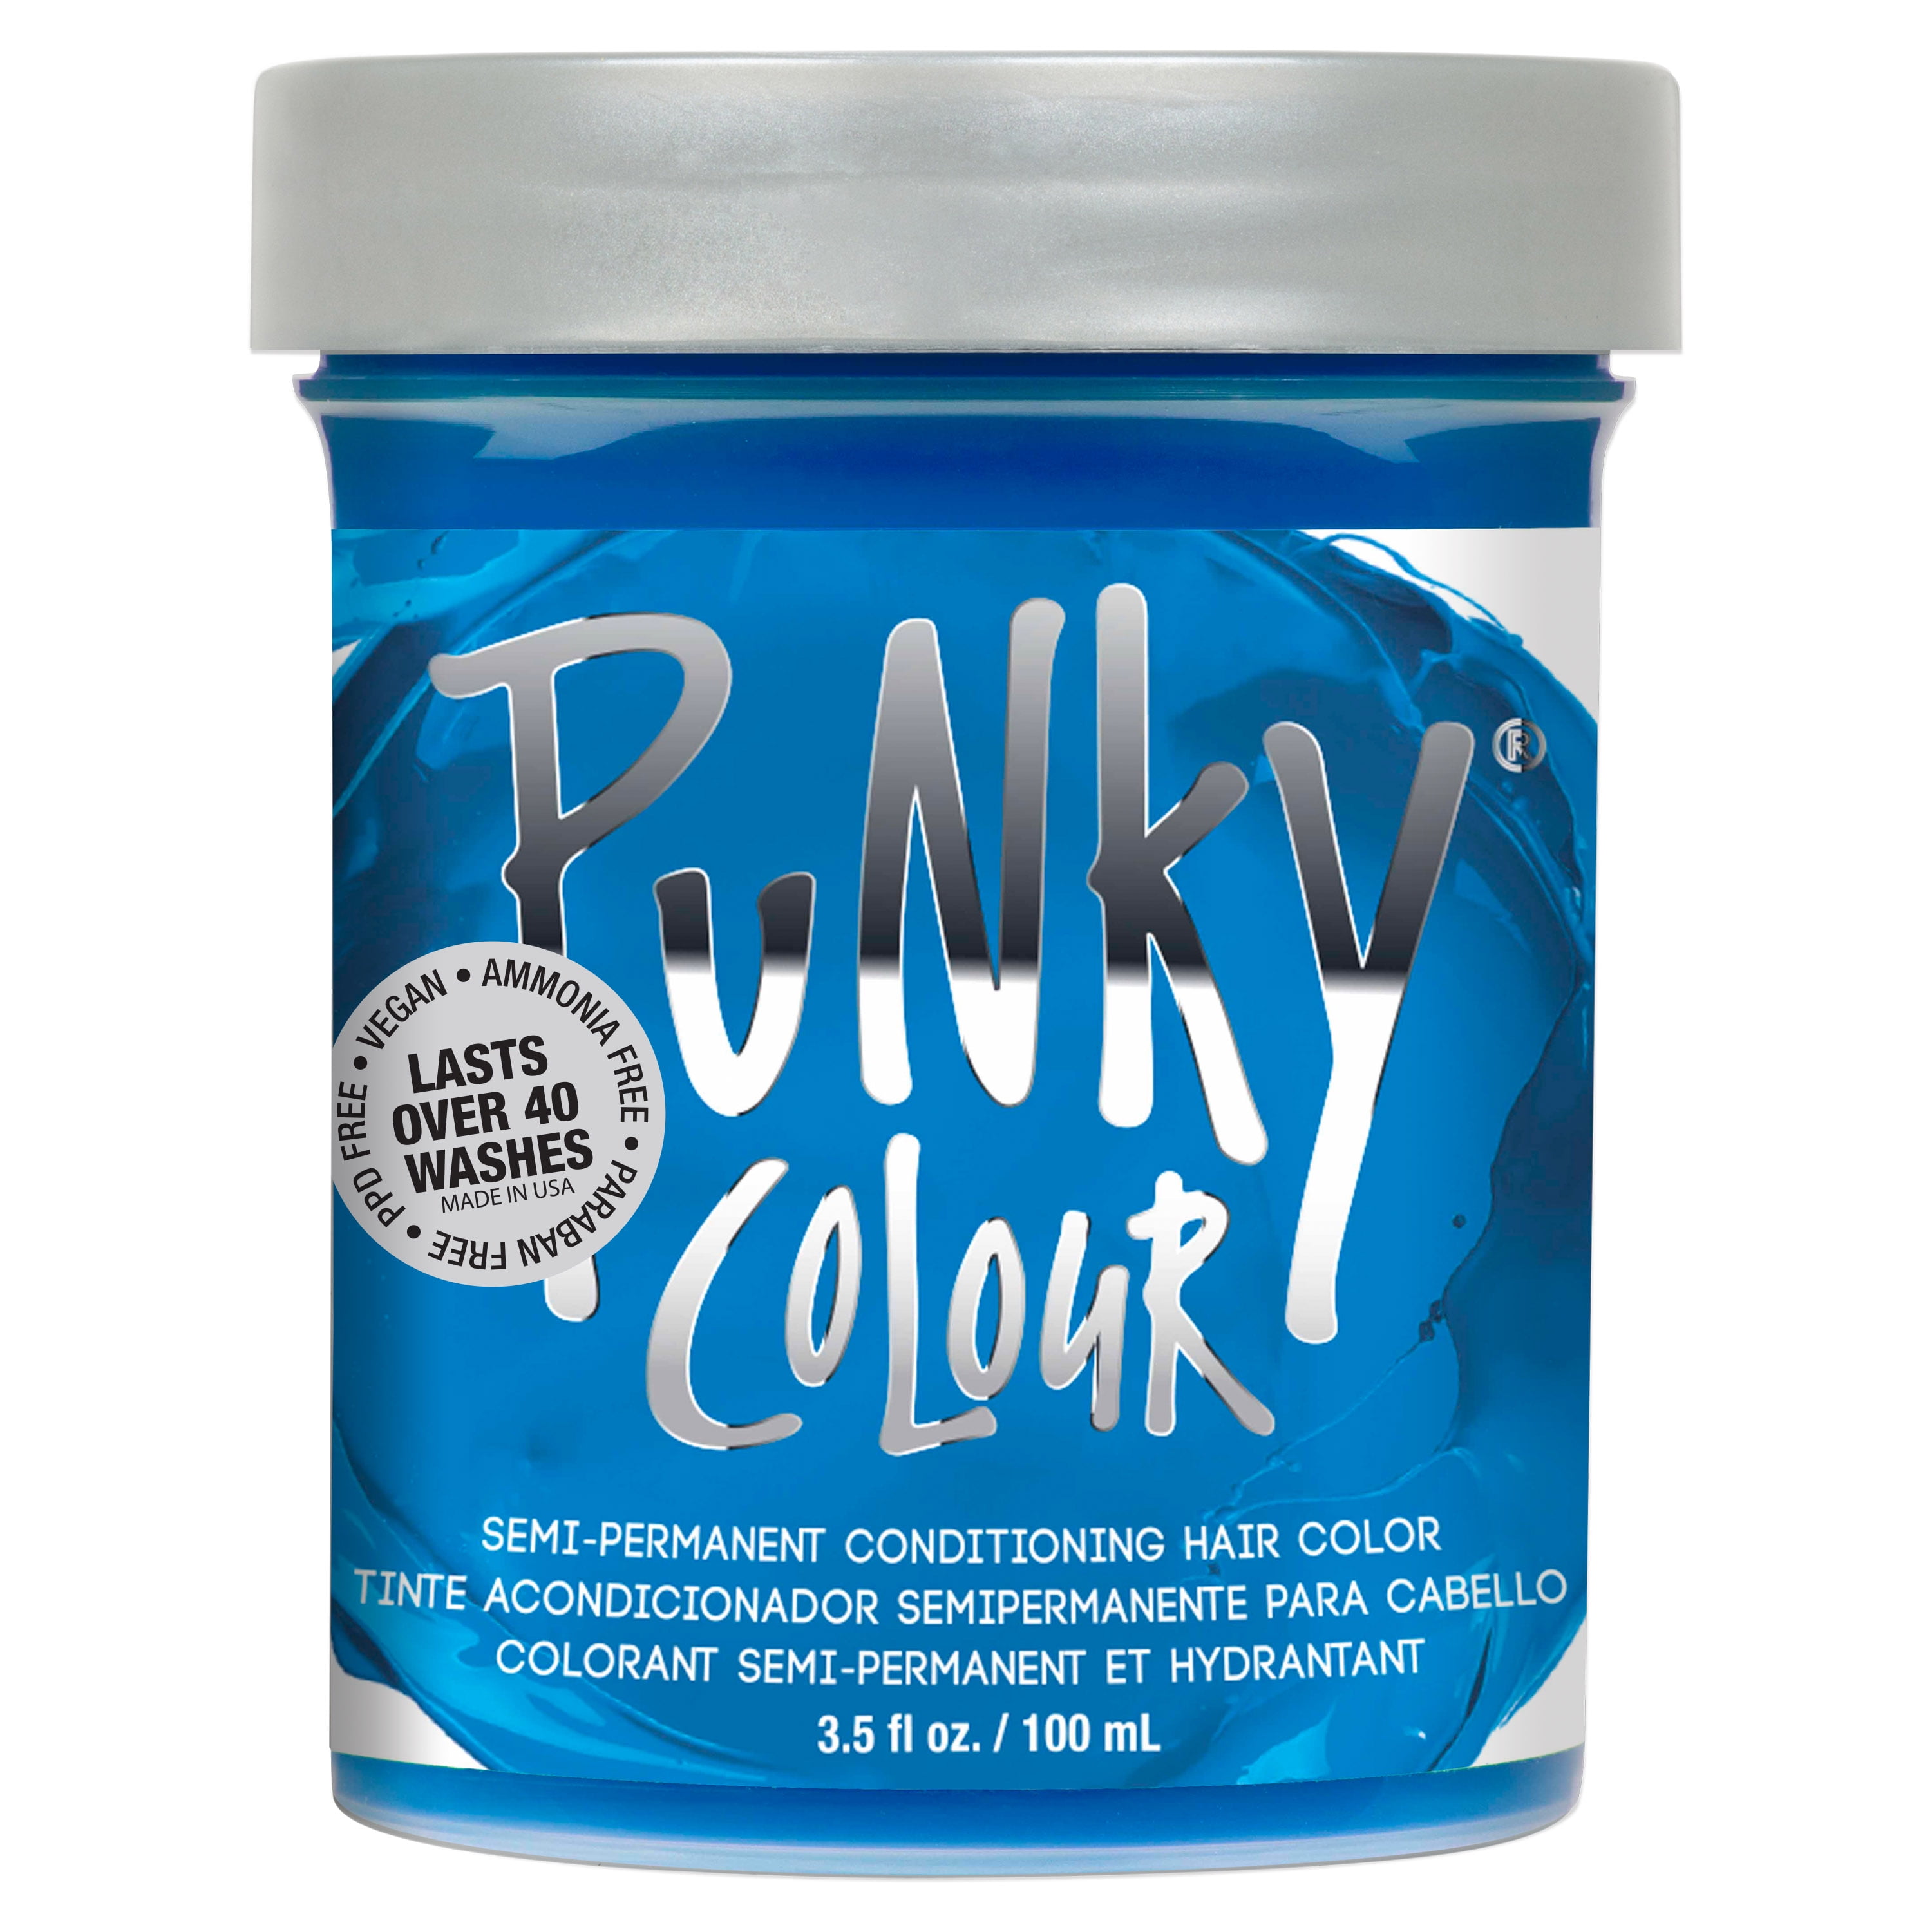 Punky Colour Semi-Permanent Hair Color, Lagoon Blue, 3.5 fl oz